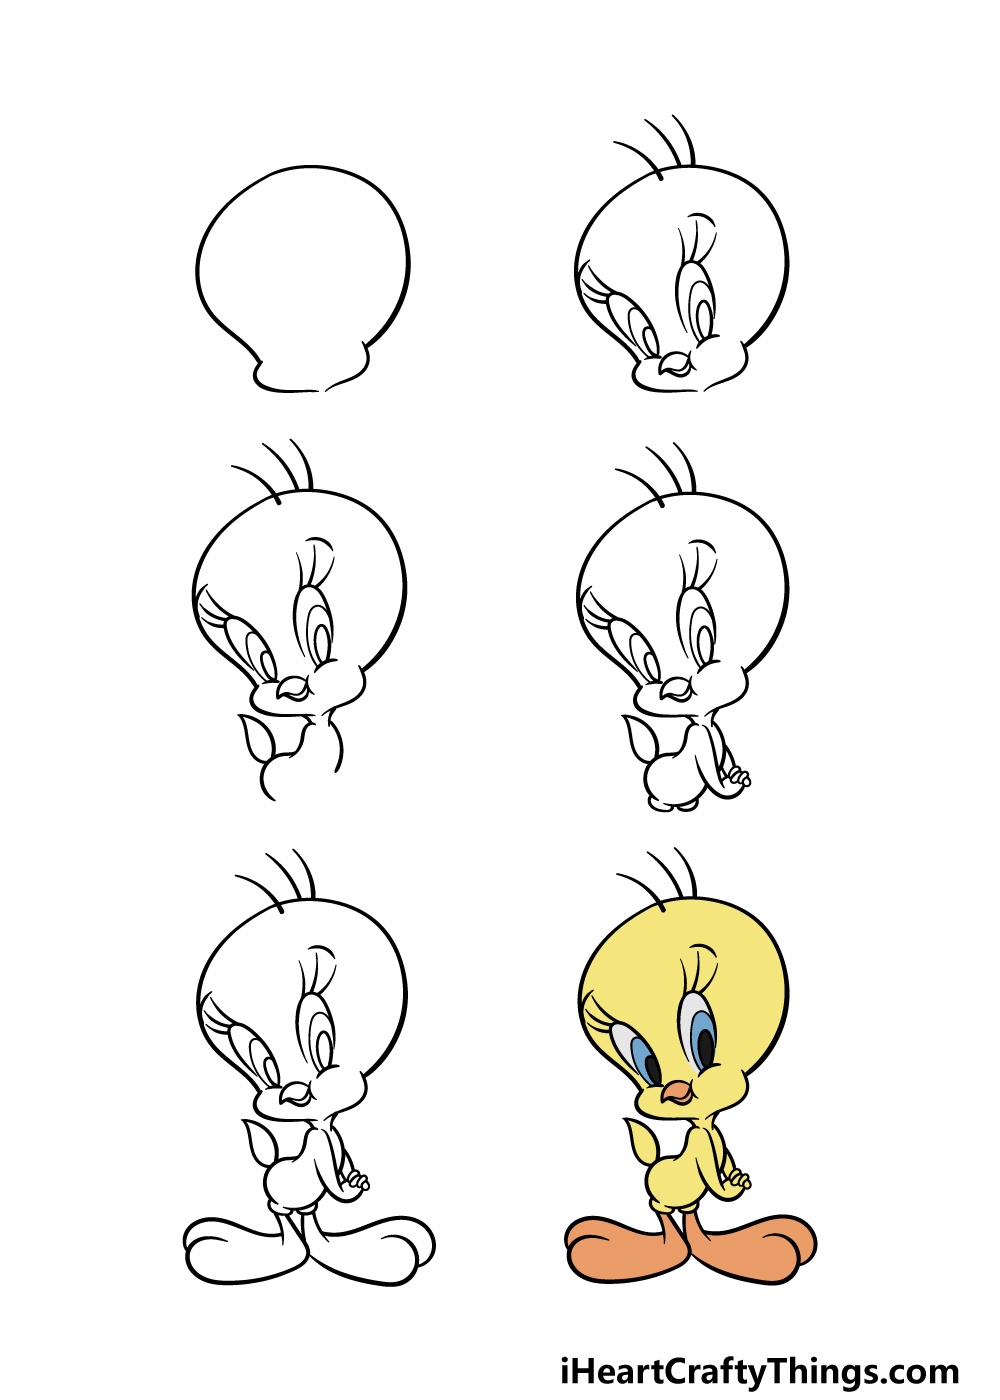 Looney Tunes Original Production Drawing: Tweety Bird – Choice Fine Art